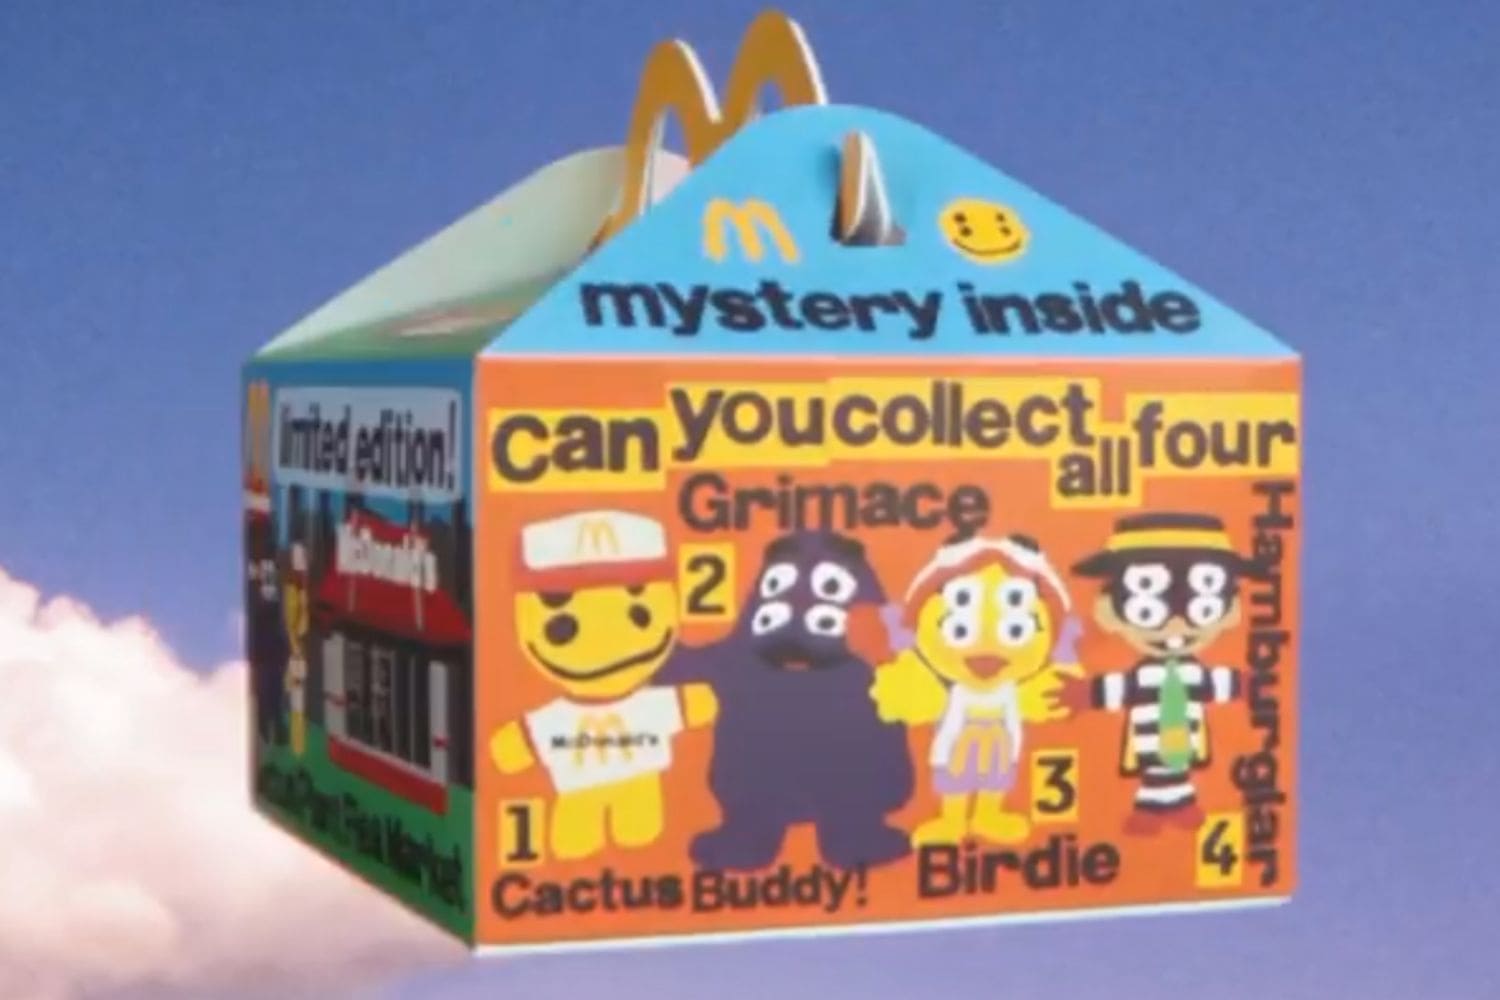 See McDonald's' first Cactus Plant Flea Market ad